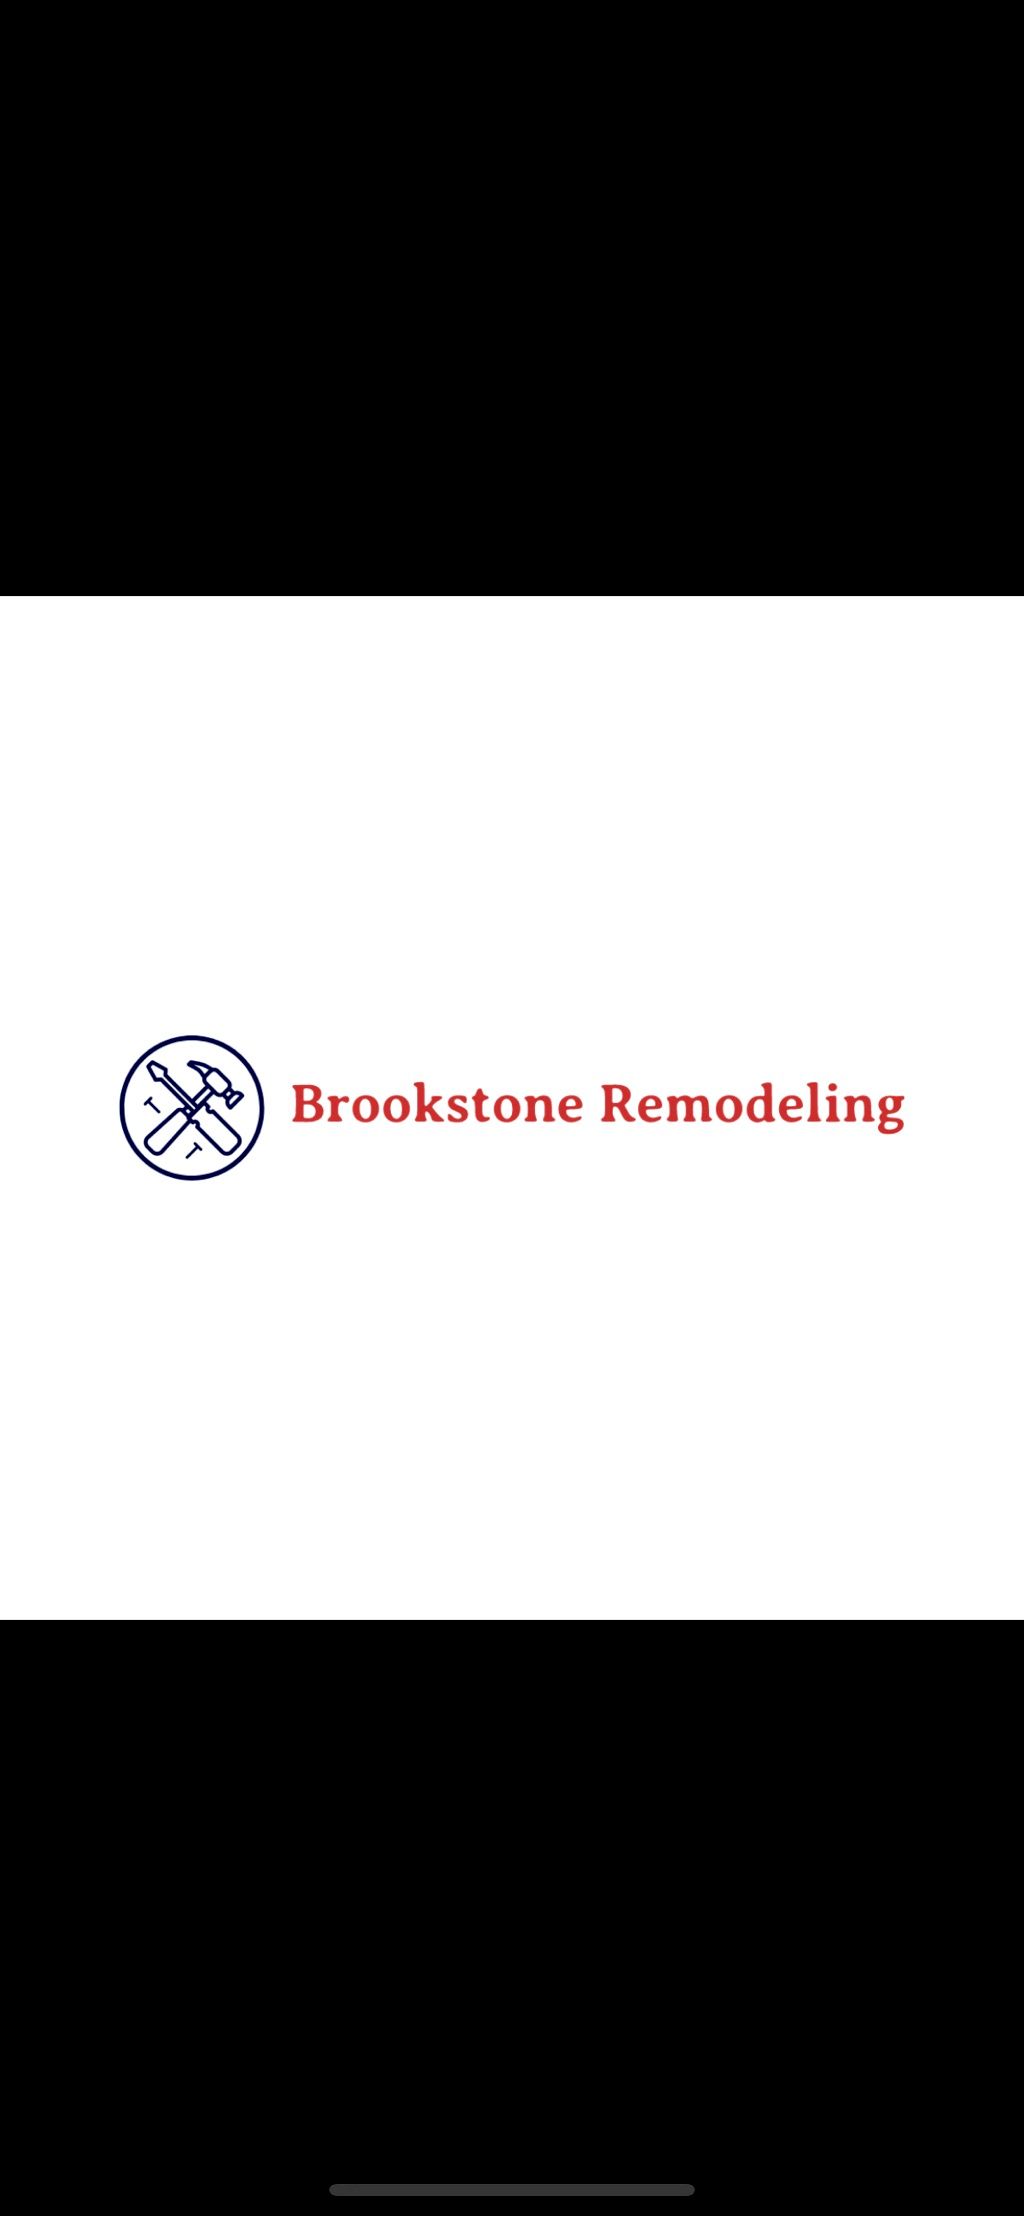 Brookstone Remodeling